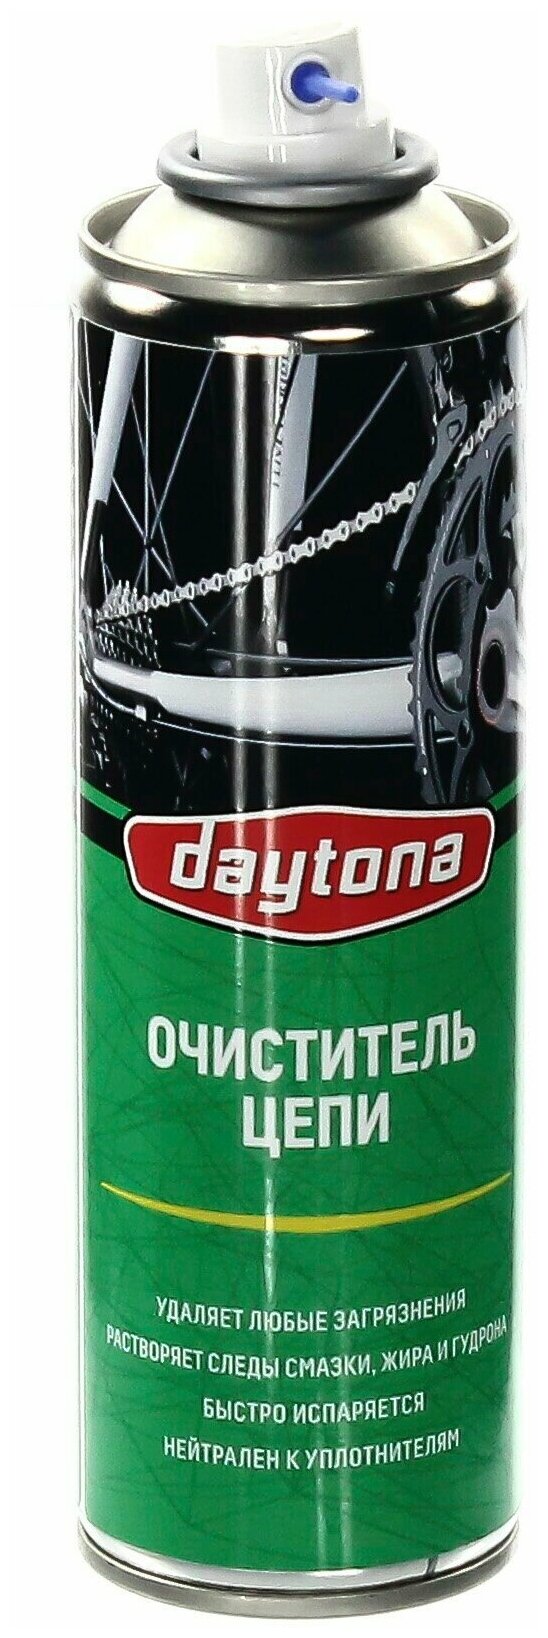 Daytona Очиститель для цепи 335мл. Аэрозоль